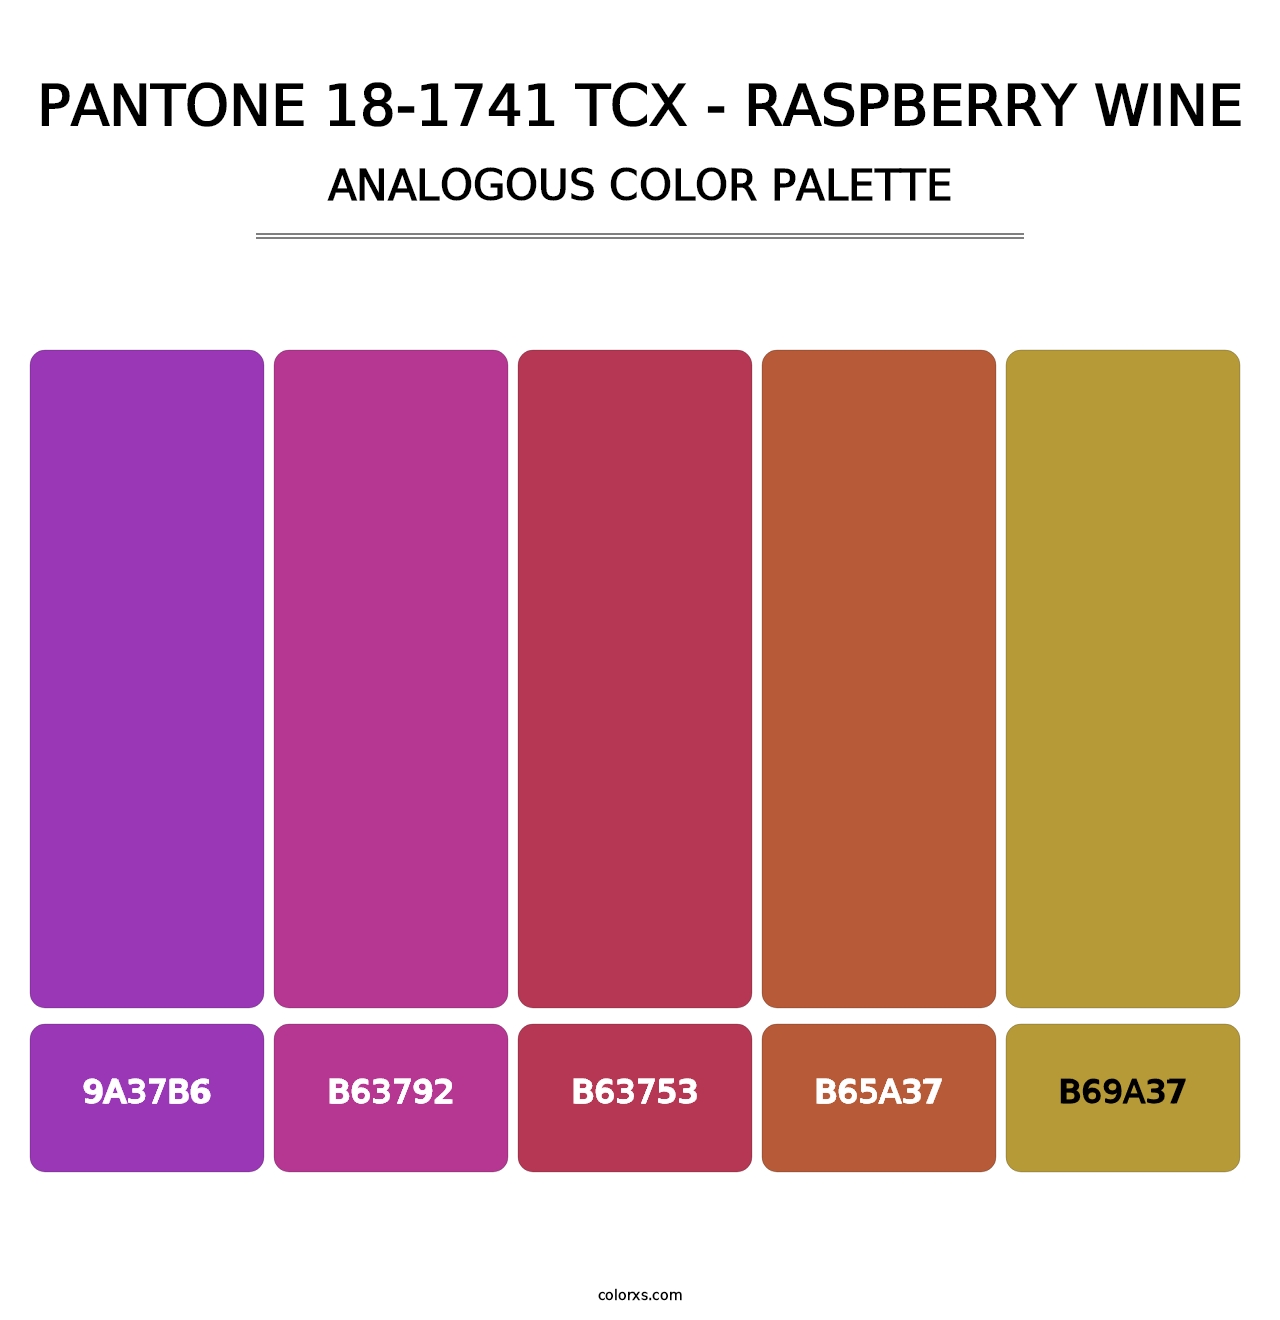 PANTONE 18-1741 TCX - Raspberry Wine - Analogous Color Palette